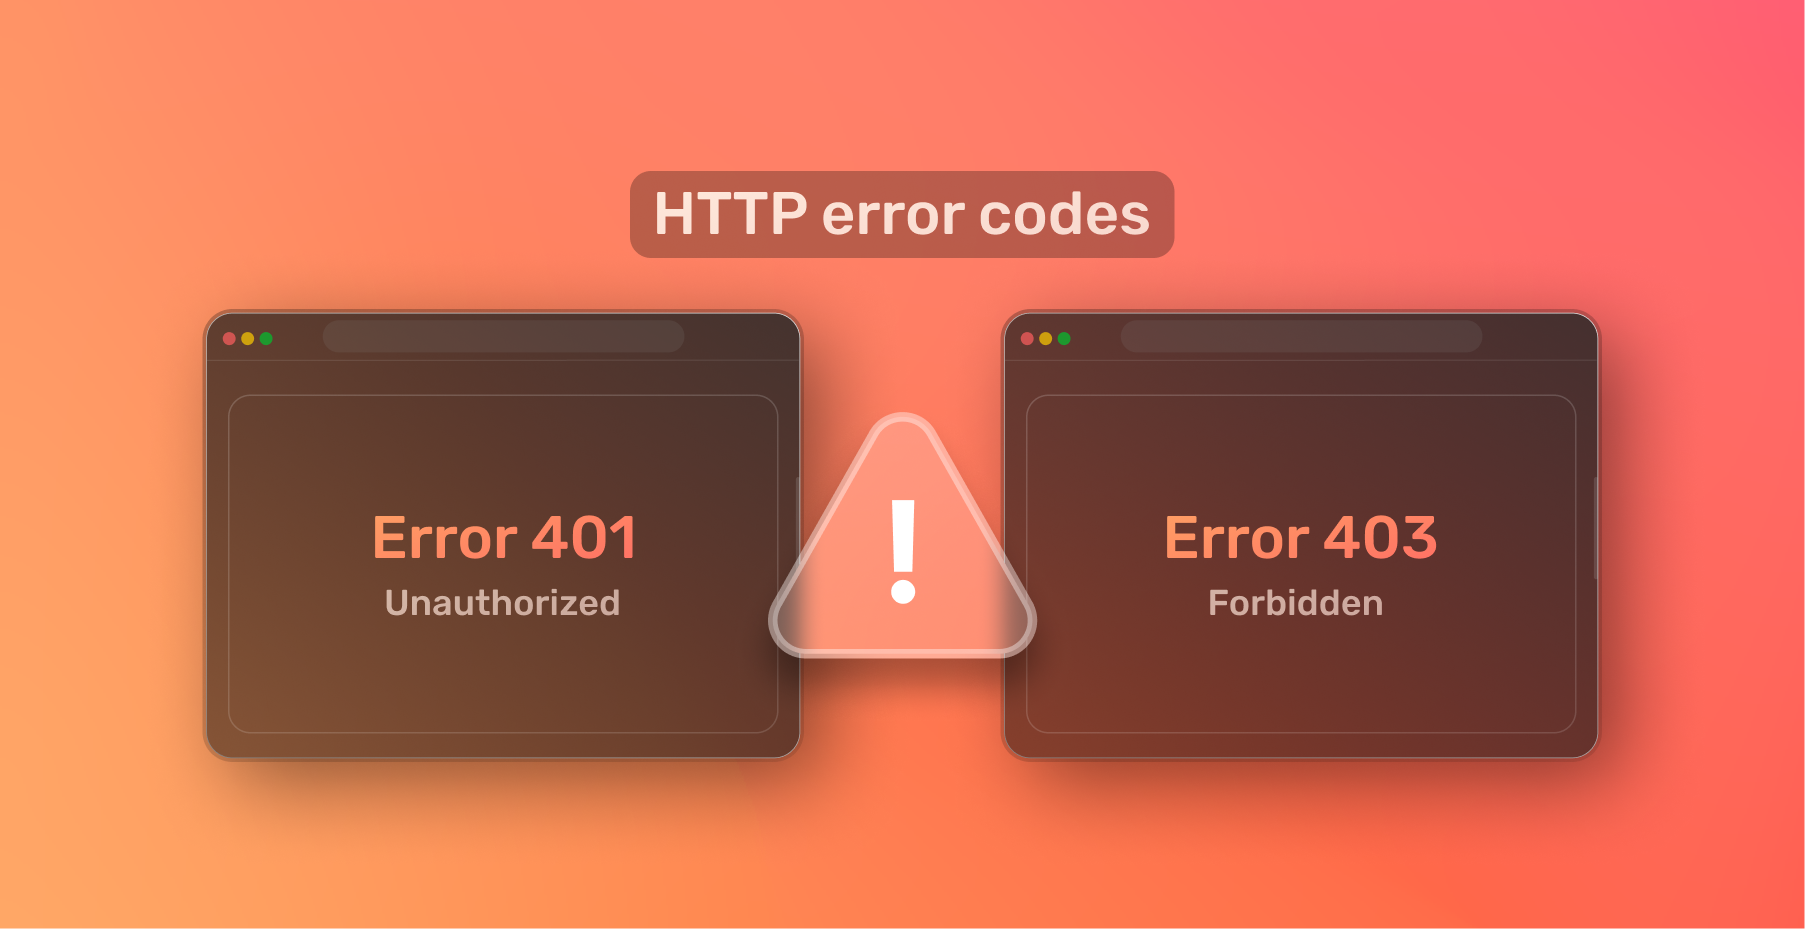 Error 403 Forbidden Explained - How Can I Fix This HTTP Error Code?